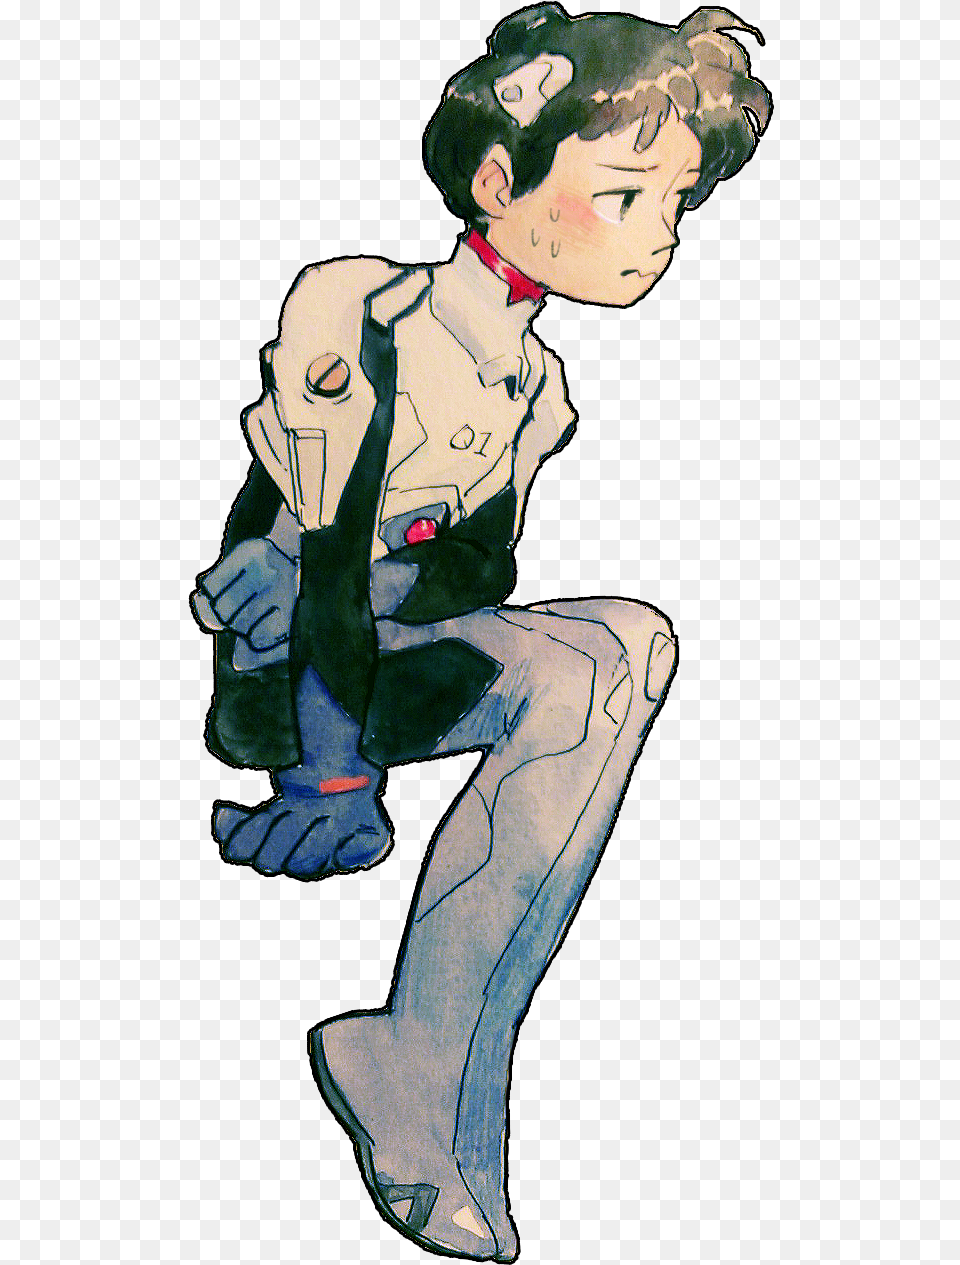 That Crazy Ikari Boy Needs Therapy Shinji Ikari Cartoon, Child, Male, Person, Art Png Image